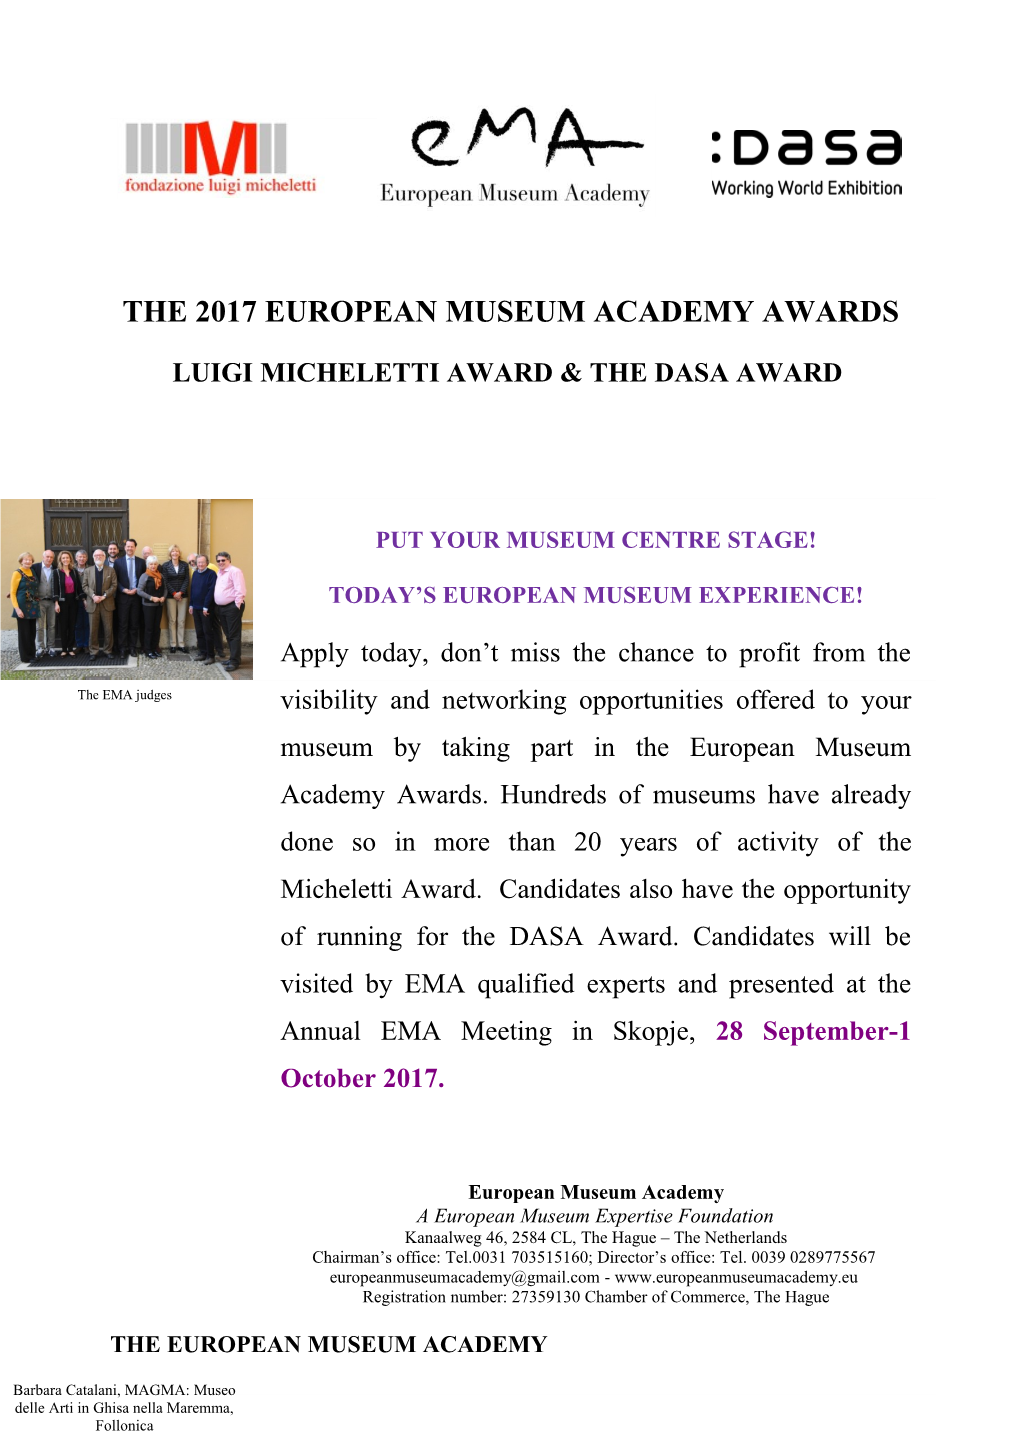 The 2017 European Museum Academy Awards